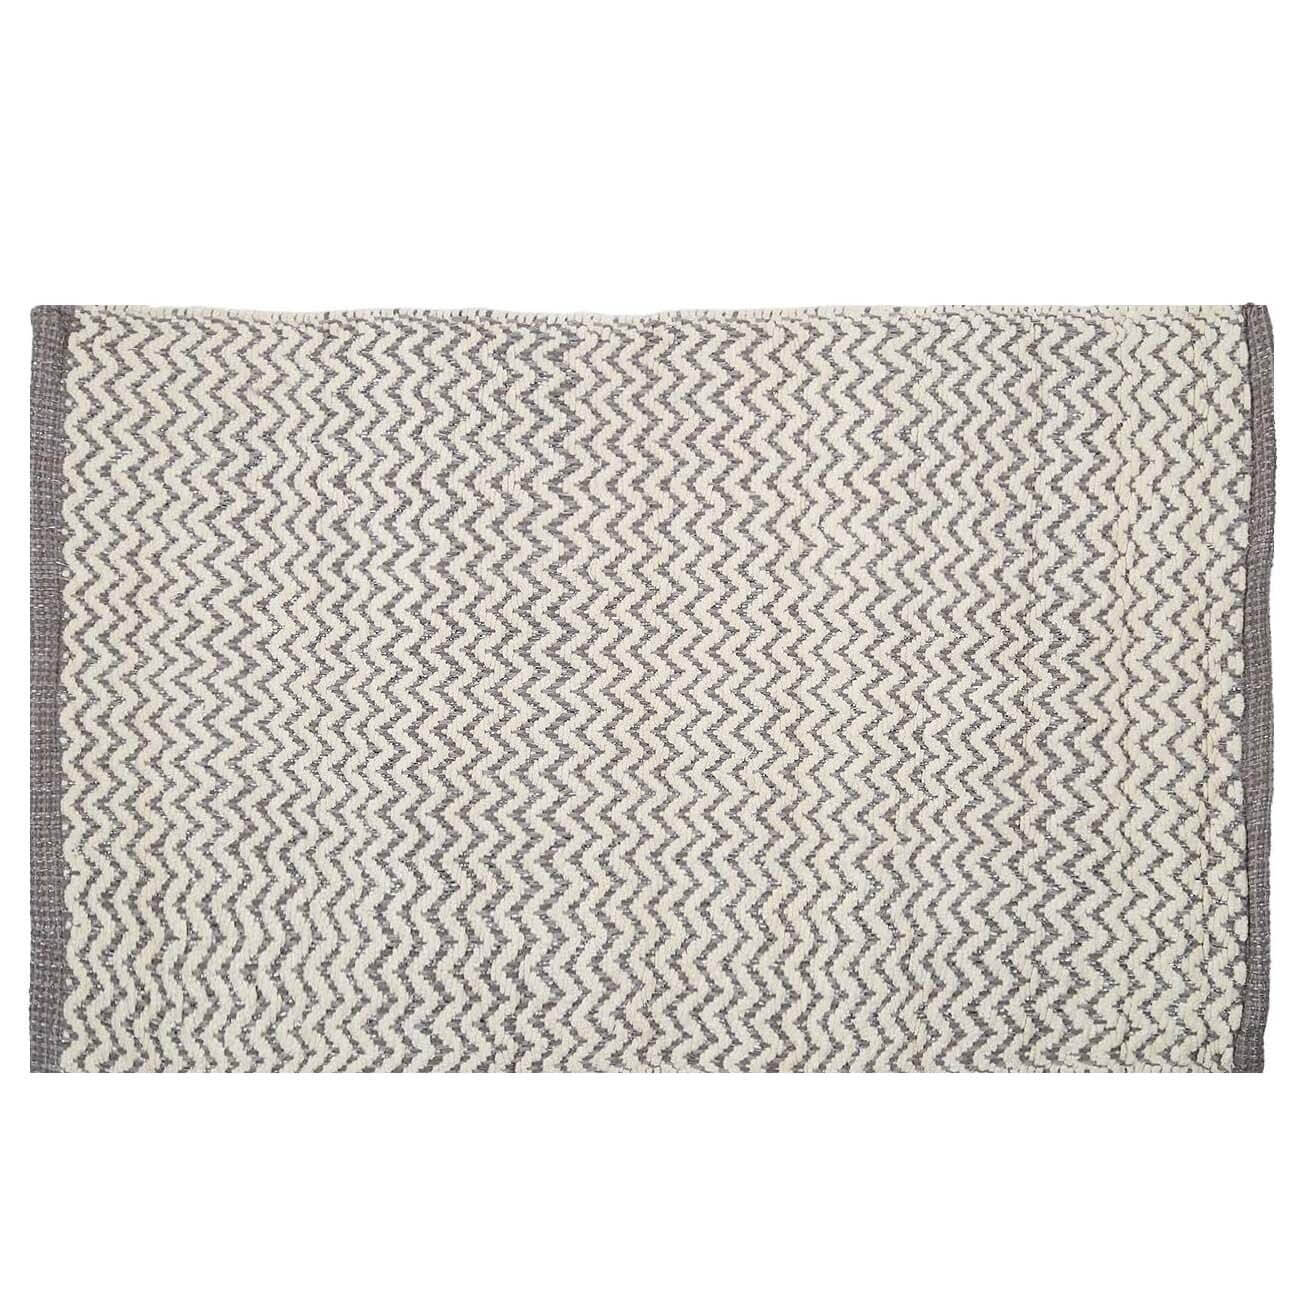 Коврик, 50х80 см, хлопок, бело-серый, Зигзаги с люрексом, Shiny threads коврик для ванной iddis promo p02pa69i12